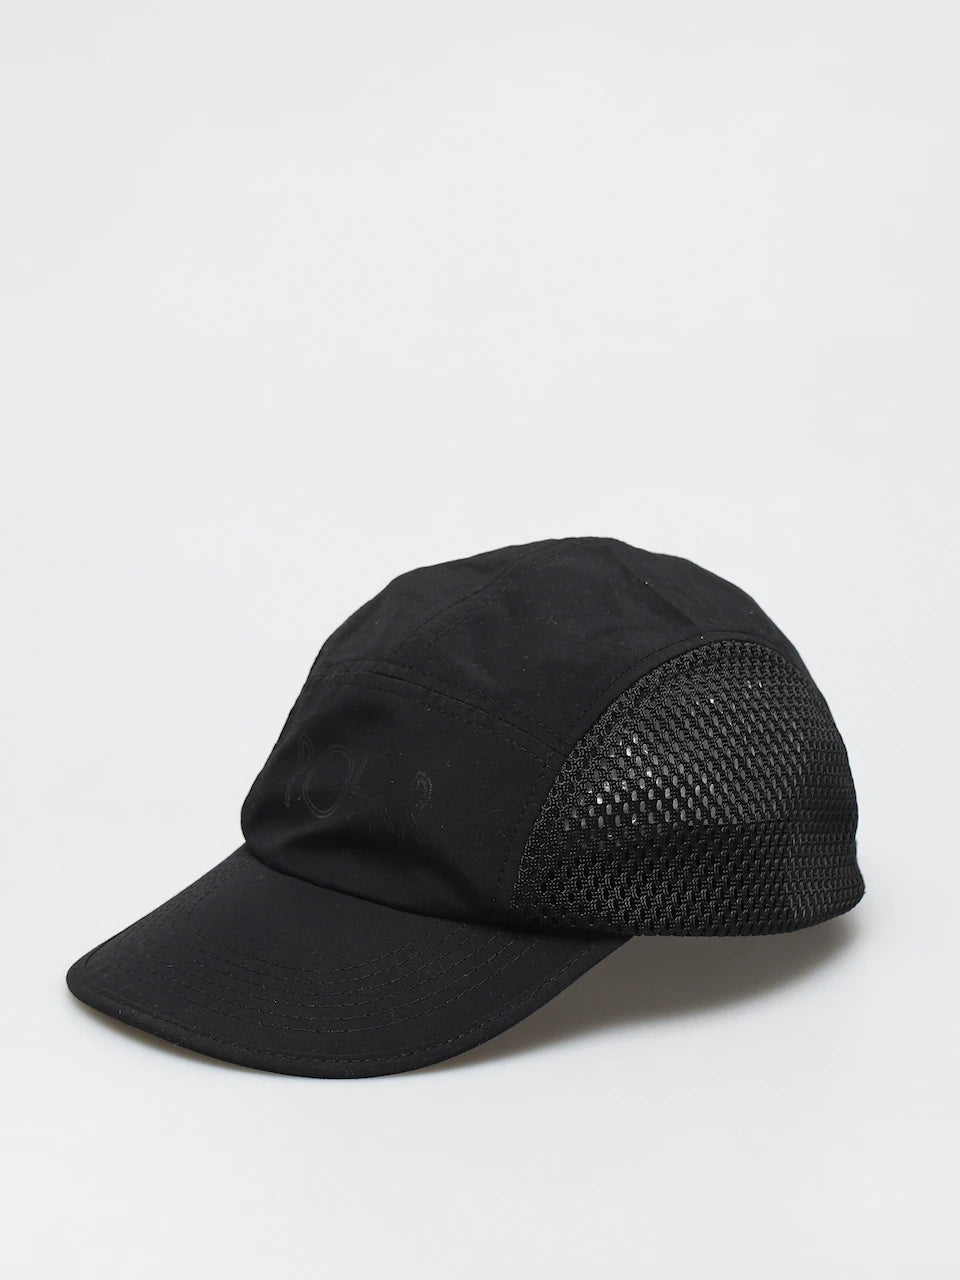 POLAR - MESH SPEED CAP - BLACK